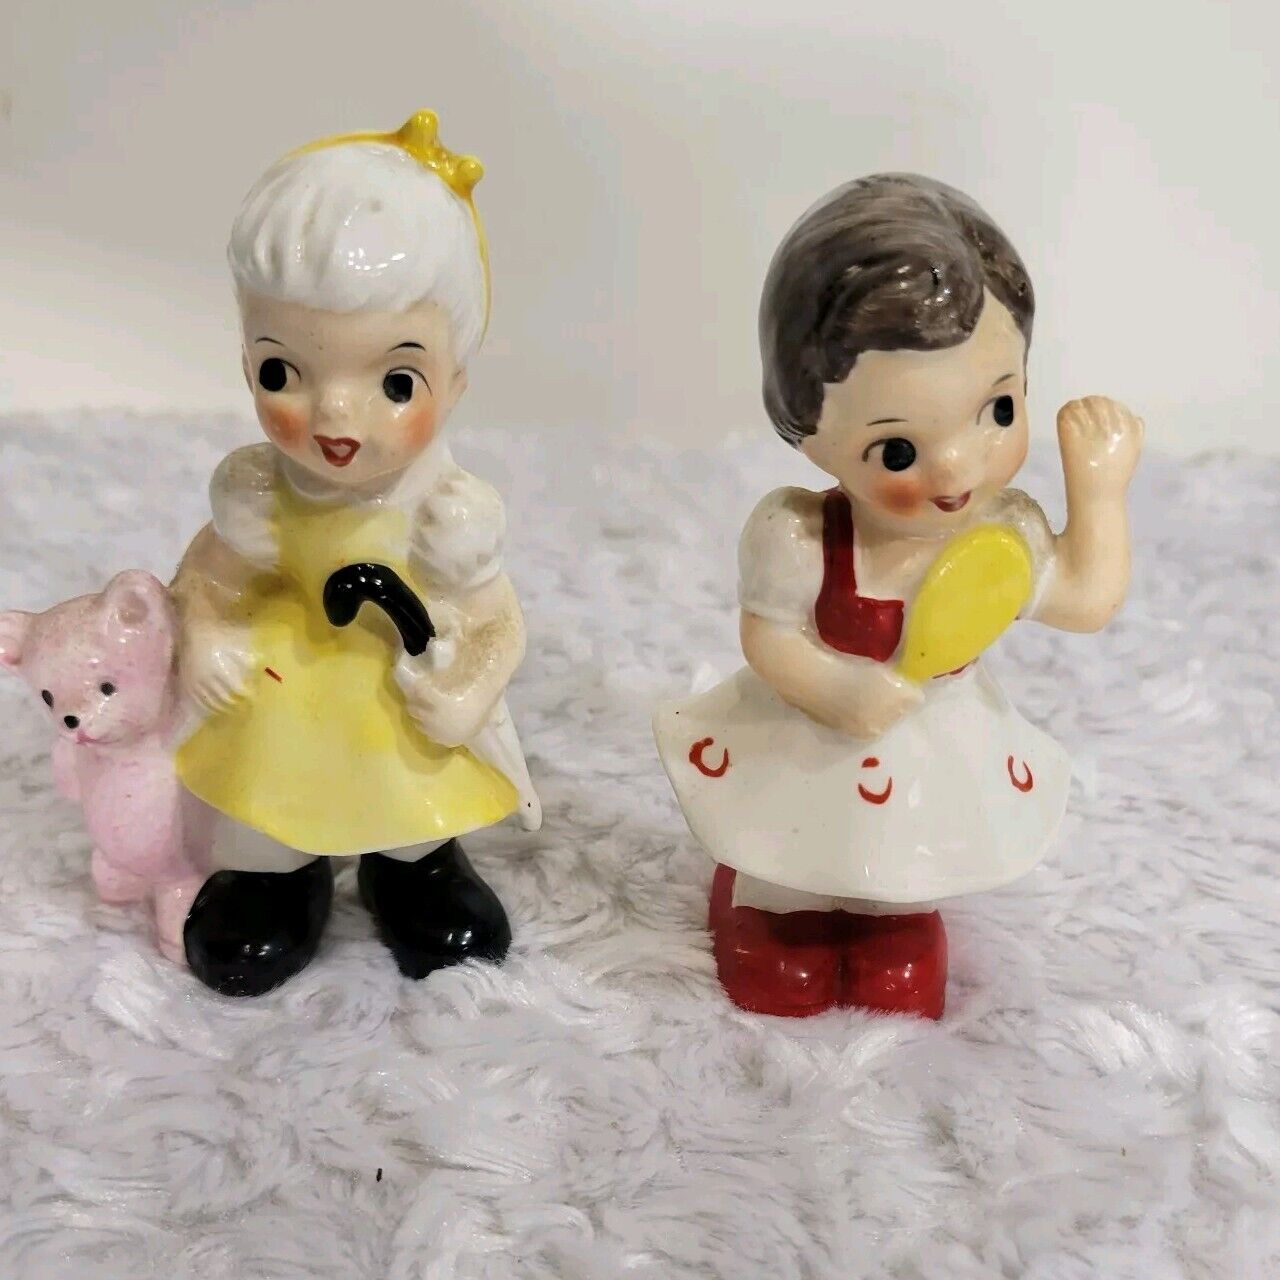 Vintage JAPAN UCAGCO 1950s Ceramic Figurine Girl lot of two teddy bear